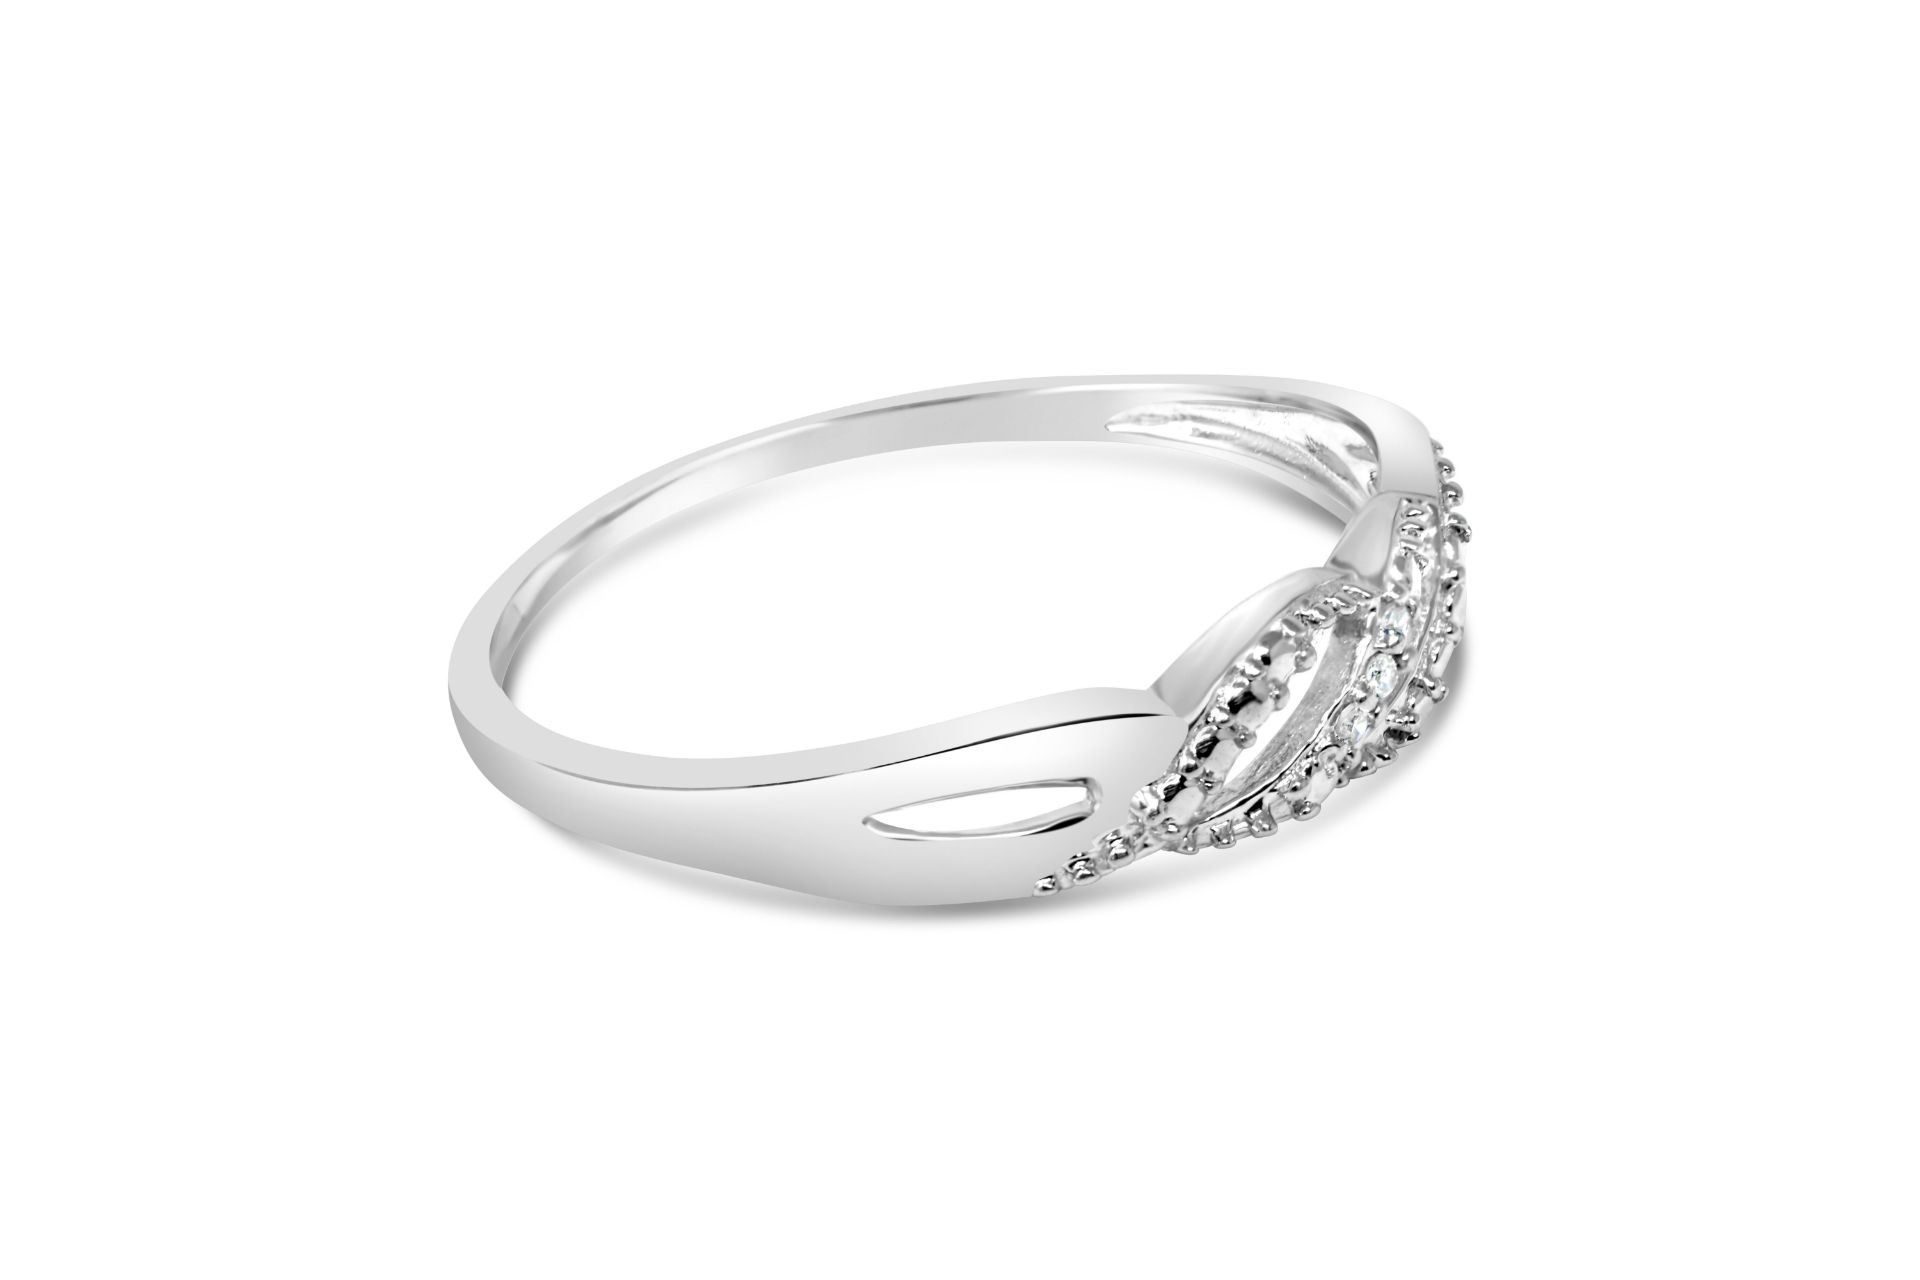 White Gold Diamond Ring, Metal 9K White Gold, Weight 1.12, Diamond Weight (ct) 0.03, Colour H, - Image 2 of 2